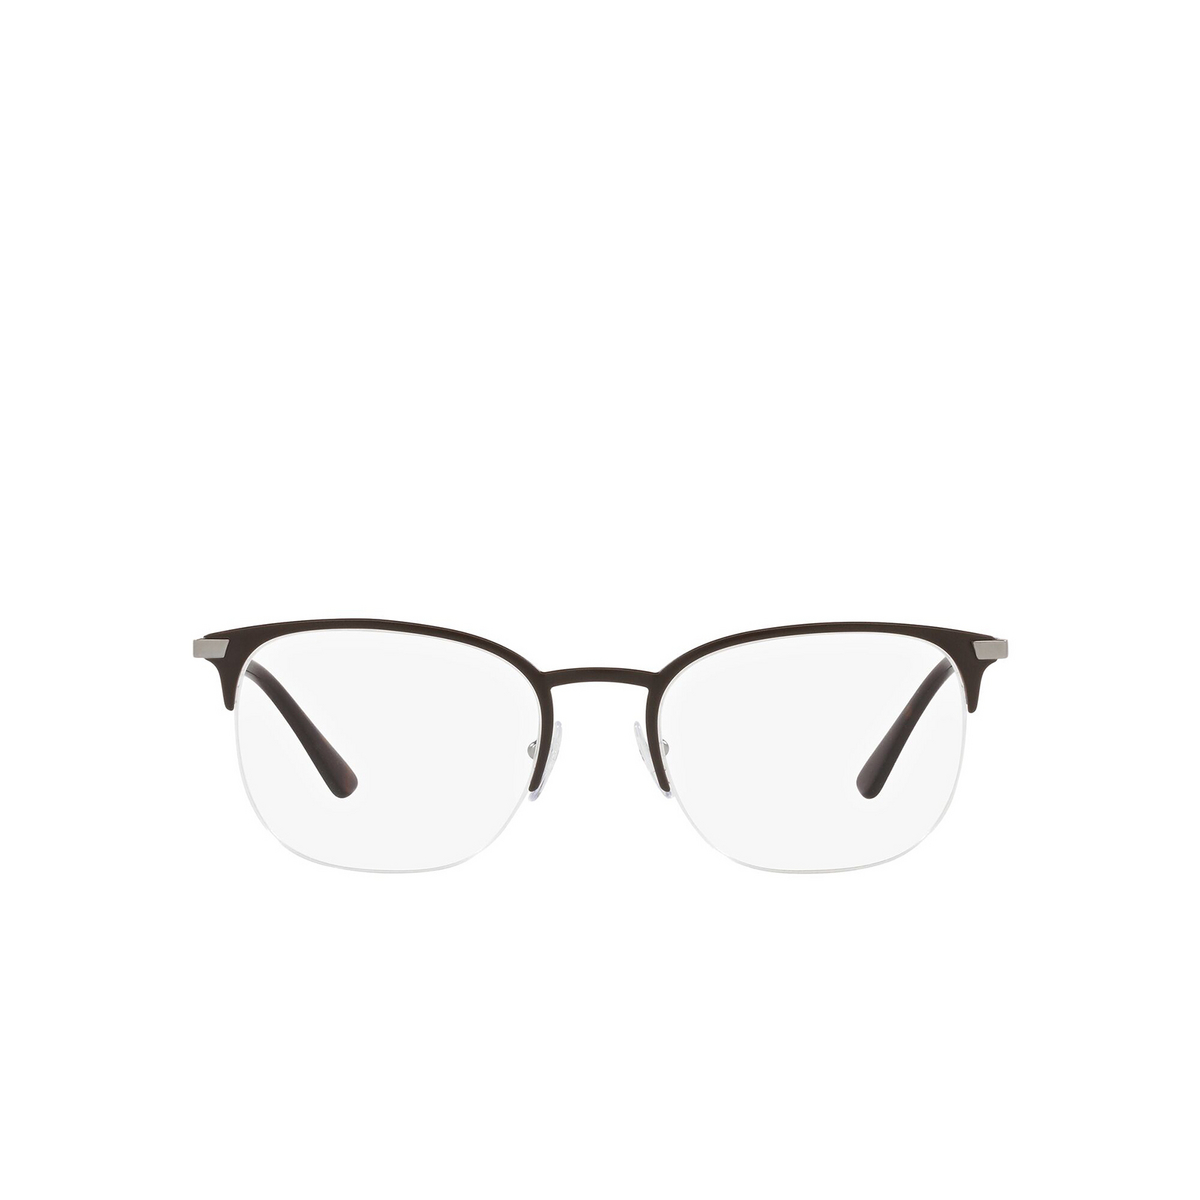 Prada® Oval Eyeglasses: PR 57YV color Matte Brown 02Q1O1 - front view.